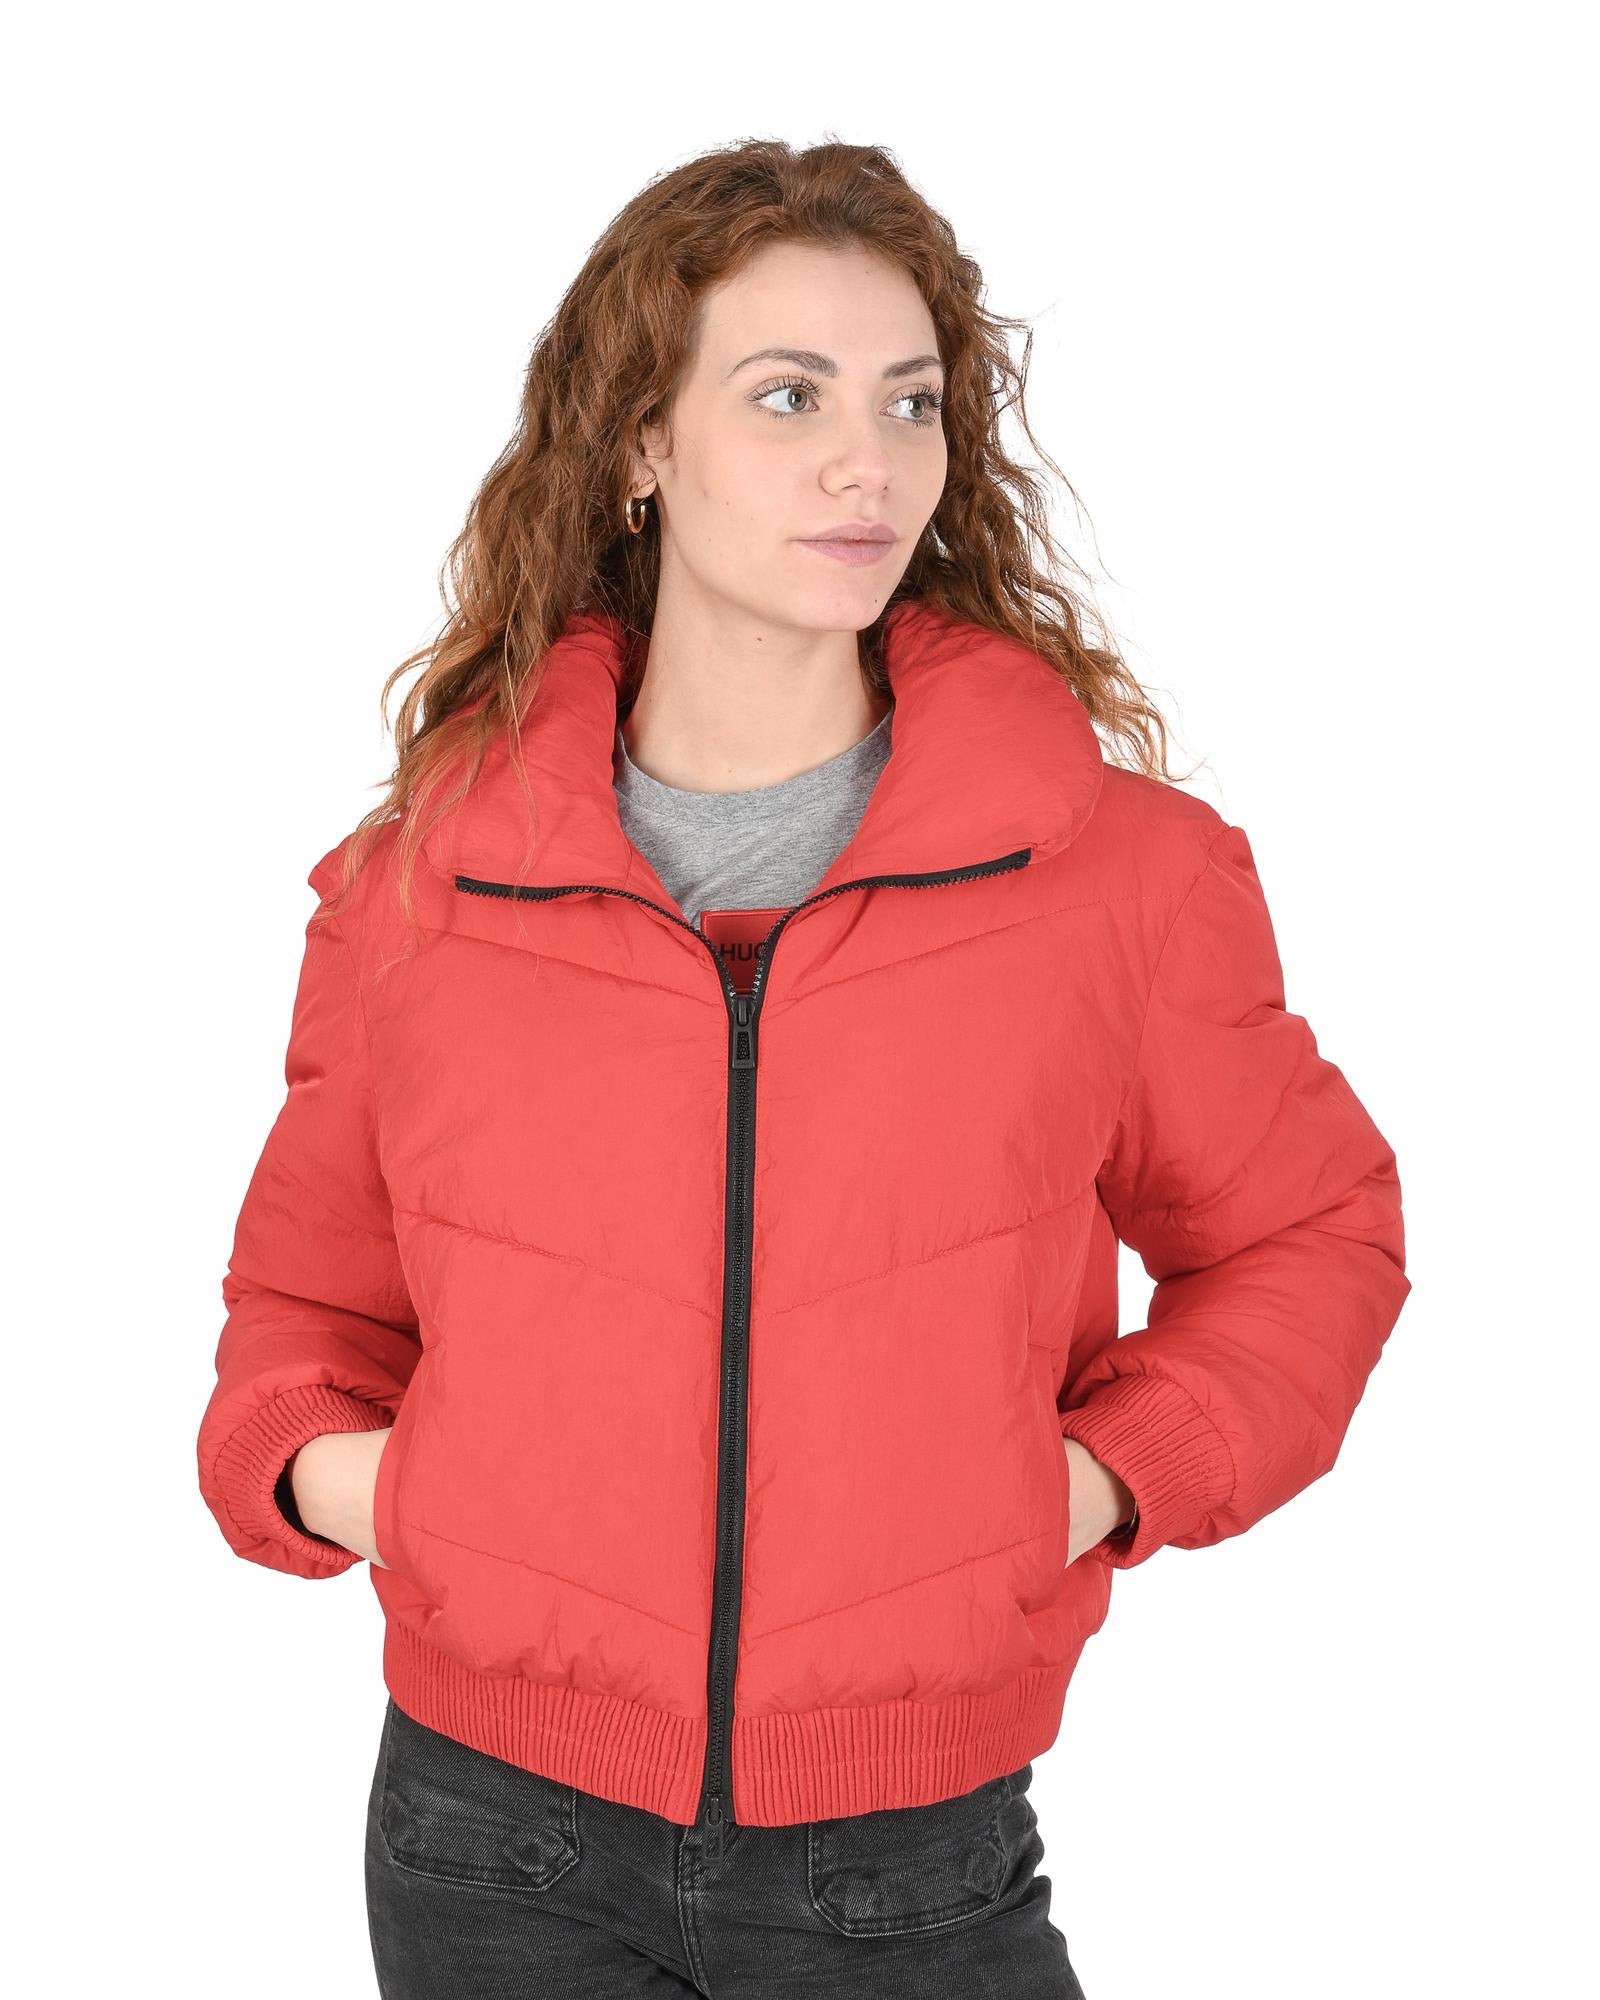 Hugo Boss Women's Red Polyamide Jacket in Red - L